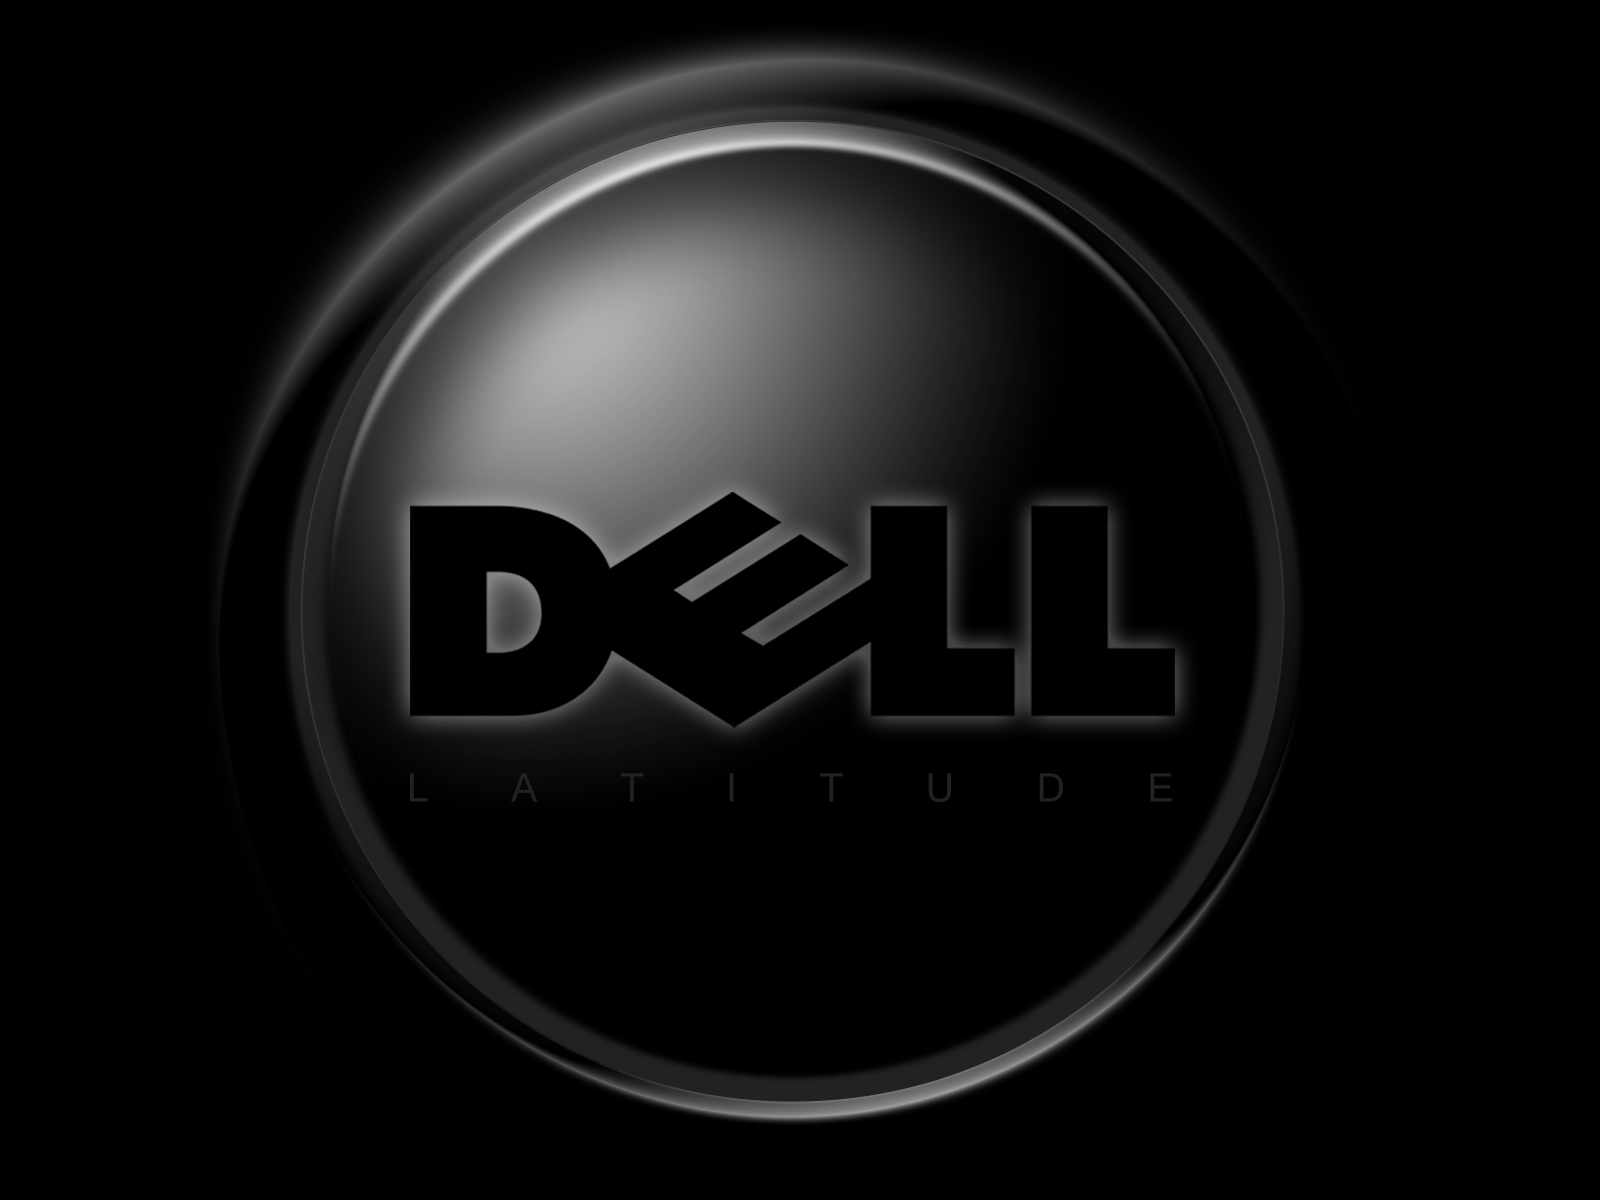 Dell Desktop Background Wallpaper